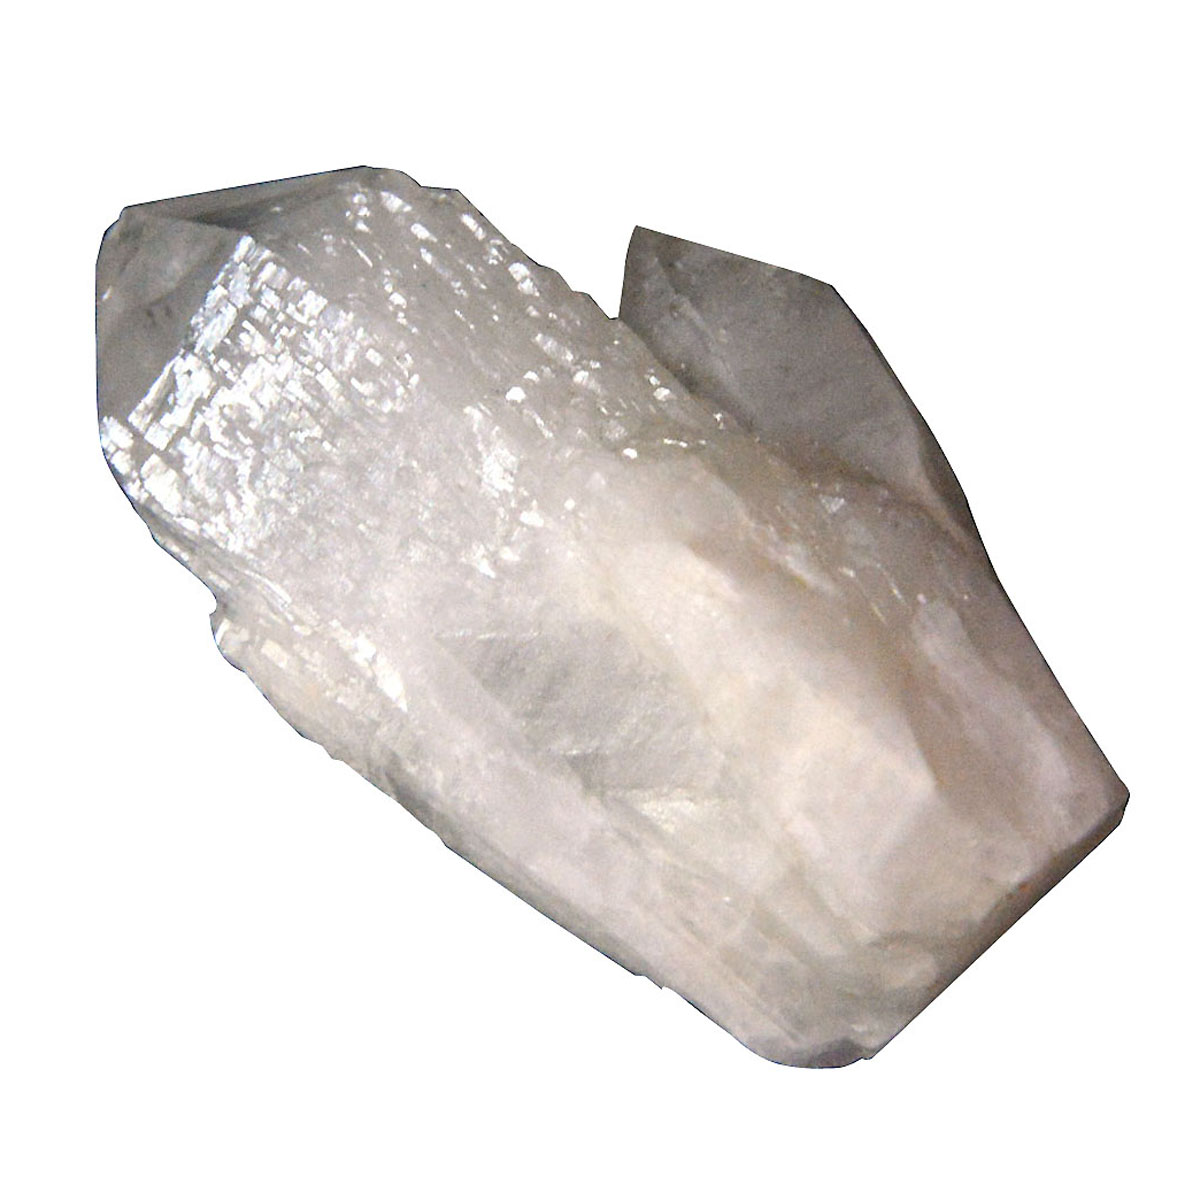  JehNH[c(Cathedral quartz)|Cg